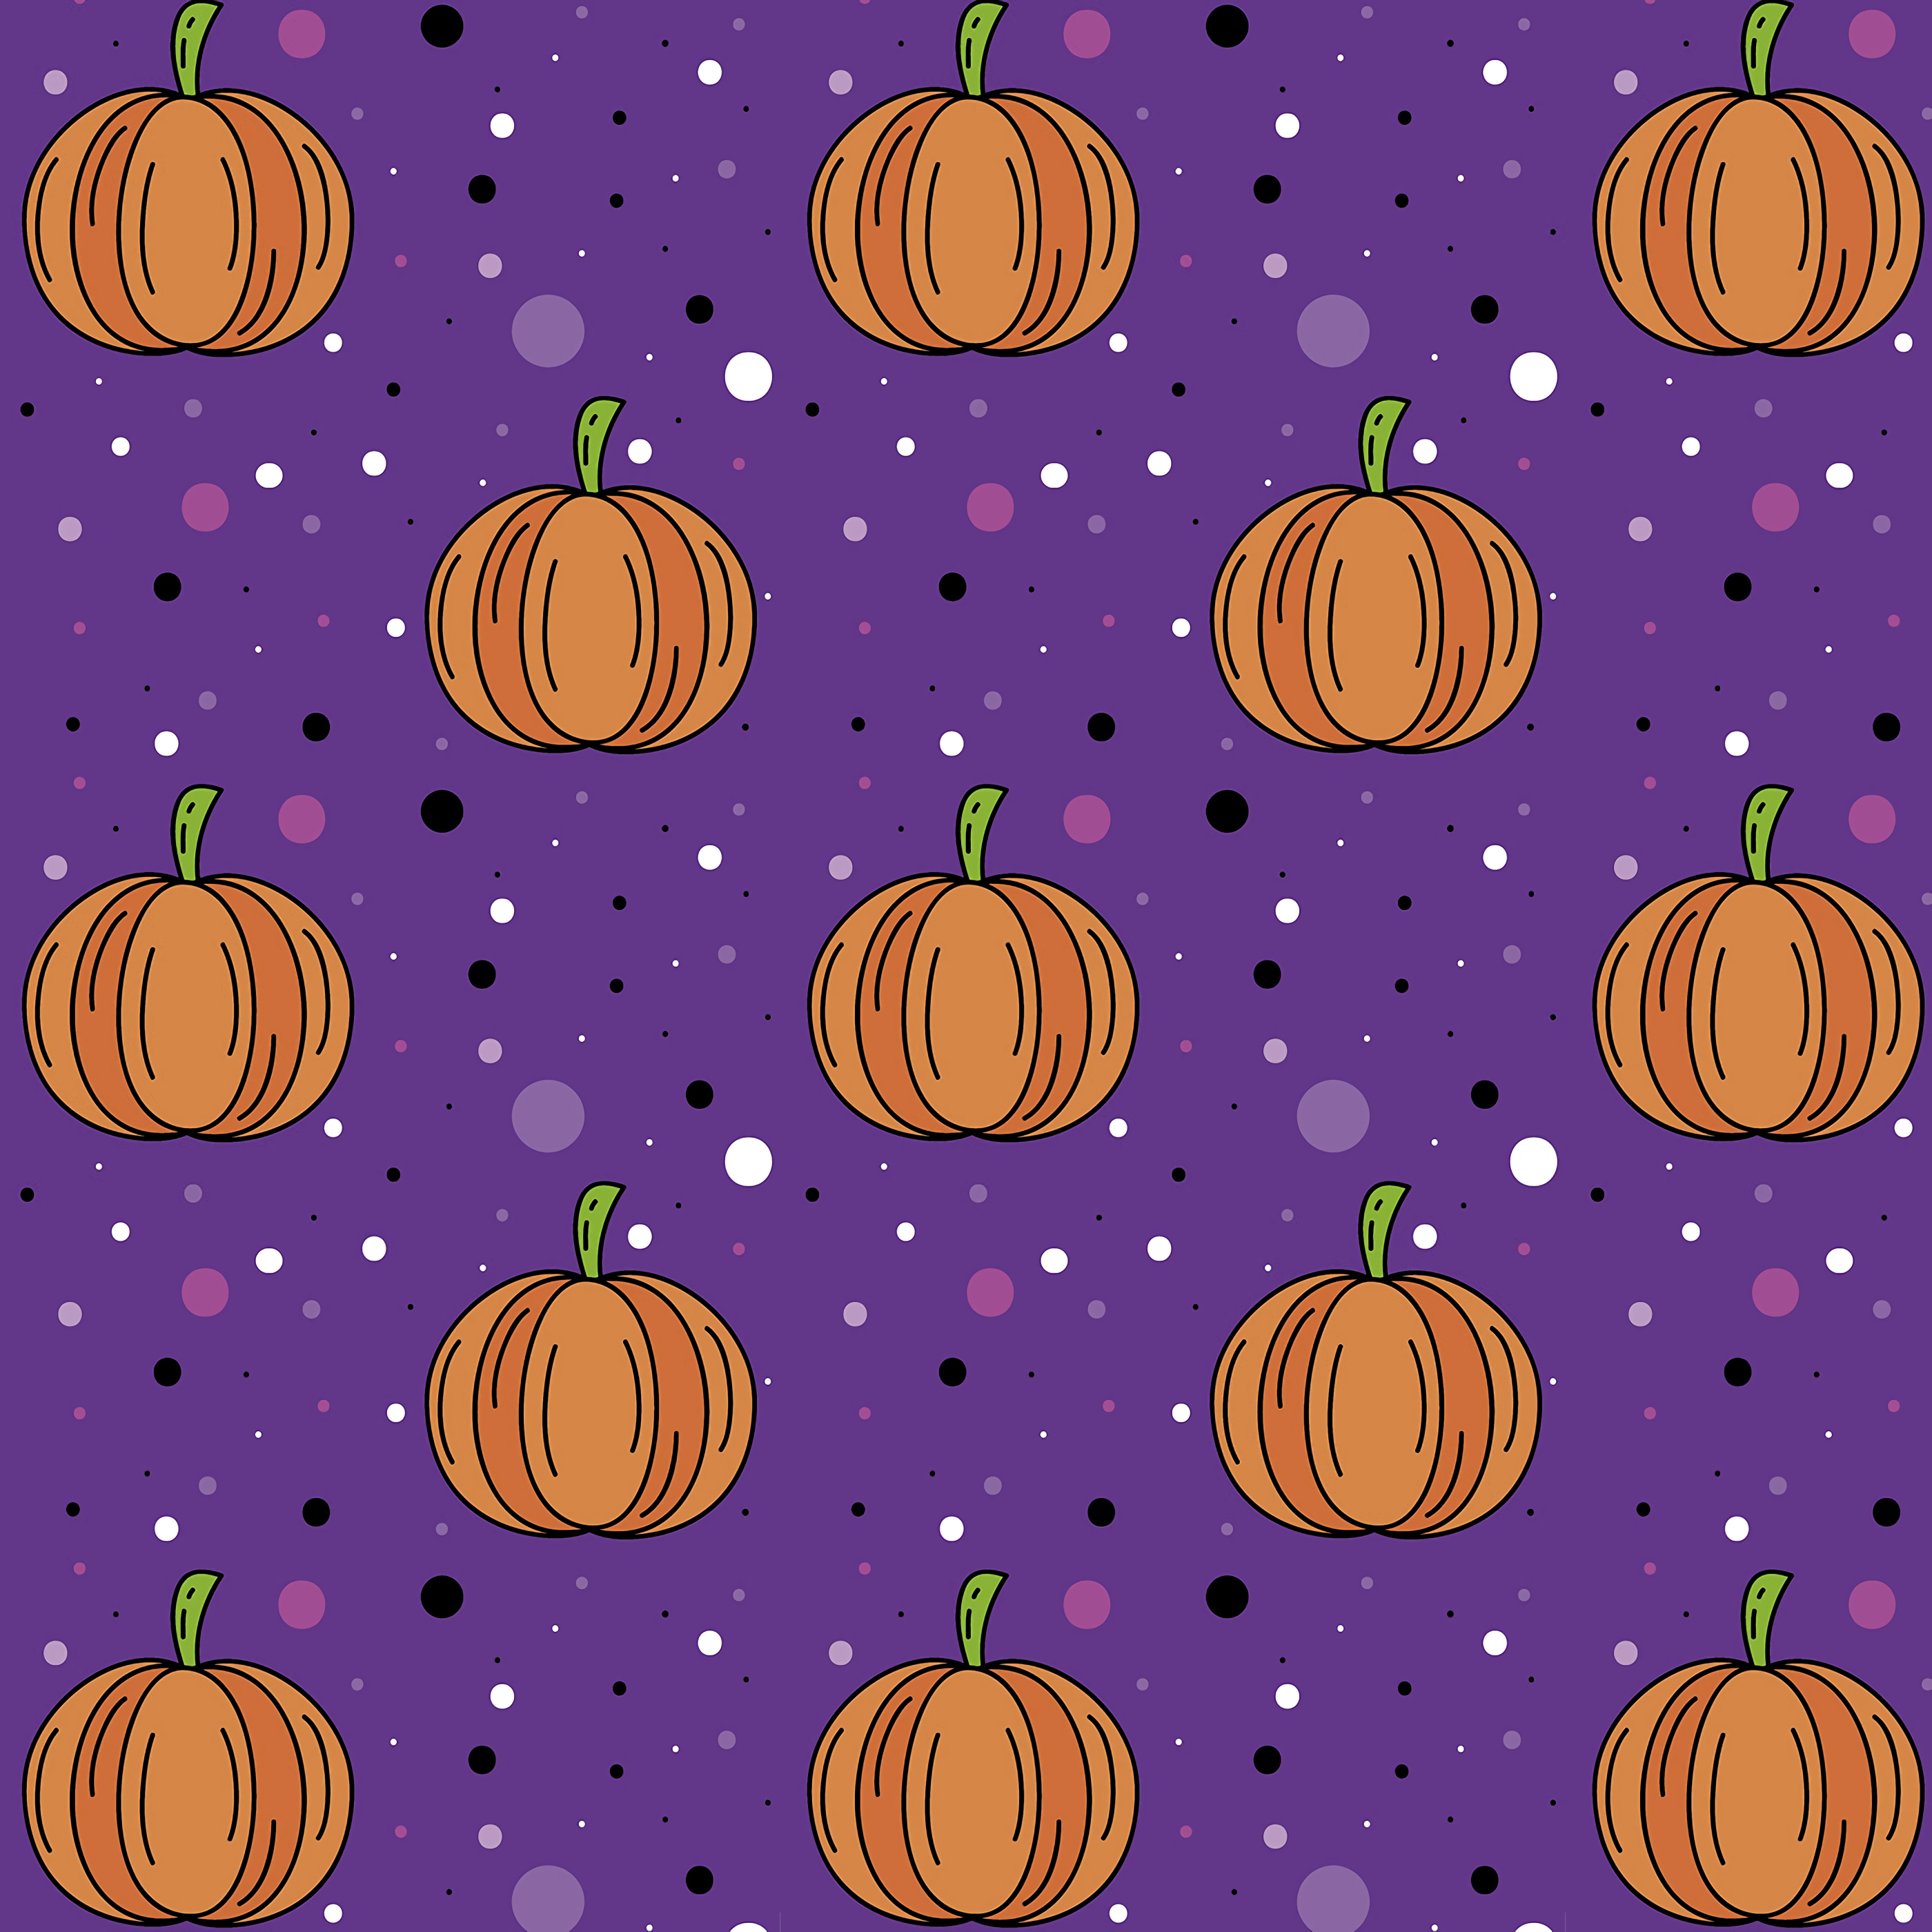 Pumpkin Wallpaper for desktop devices